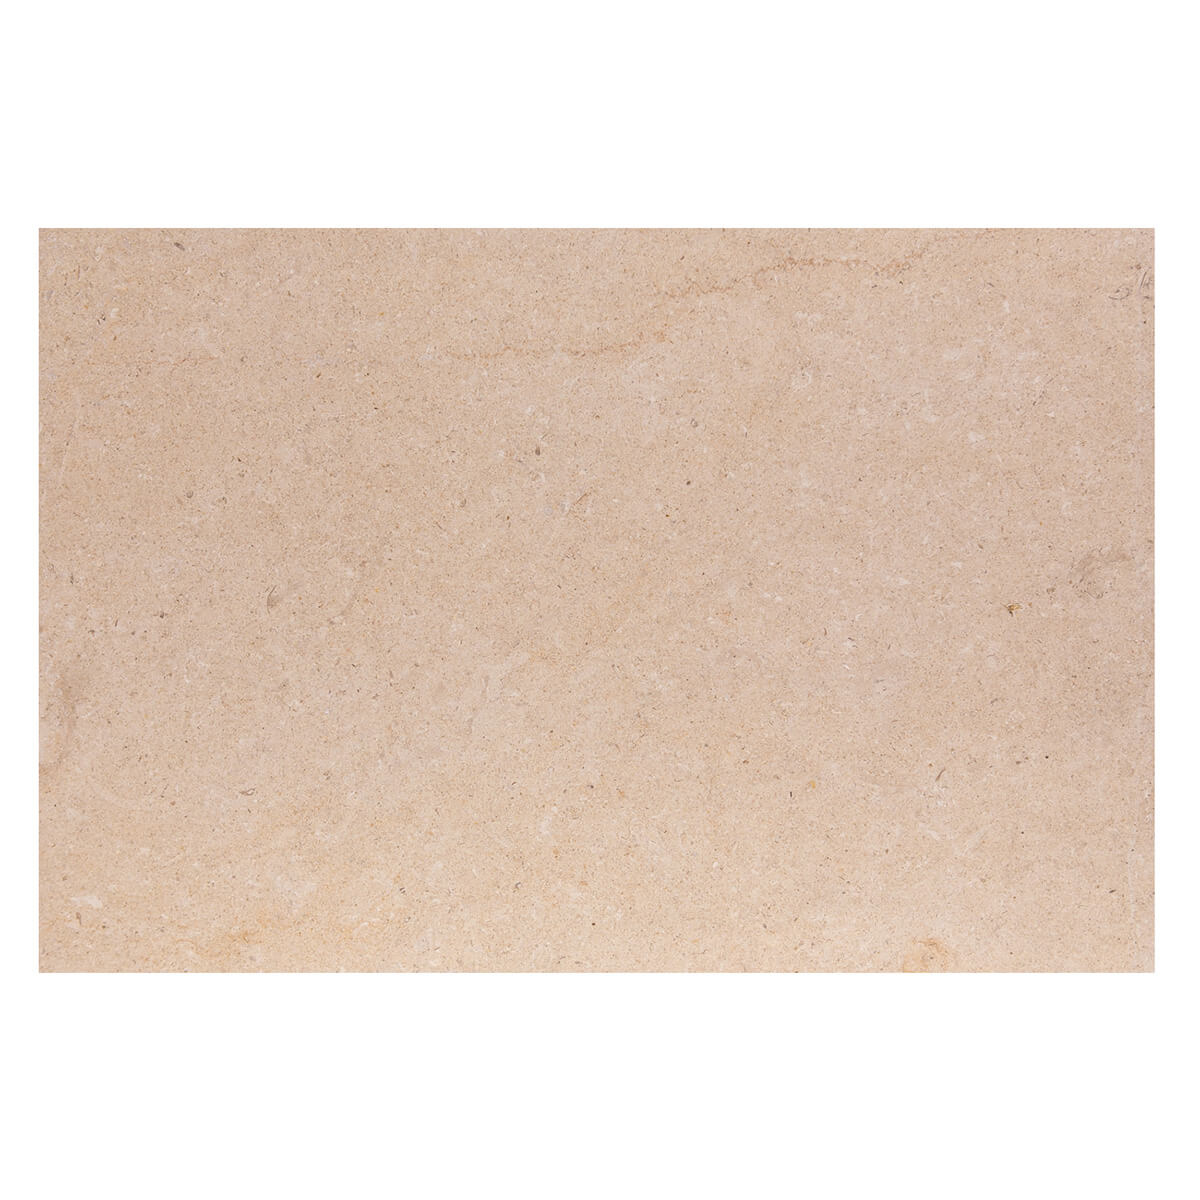 haussmann corton beige limestone rectangle natural stone field tile 16x24 patine